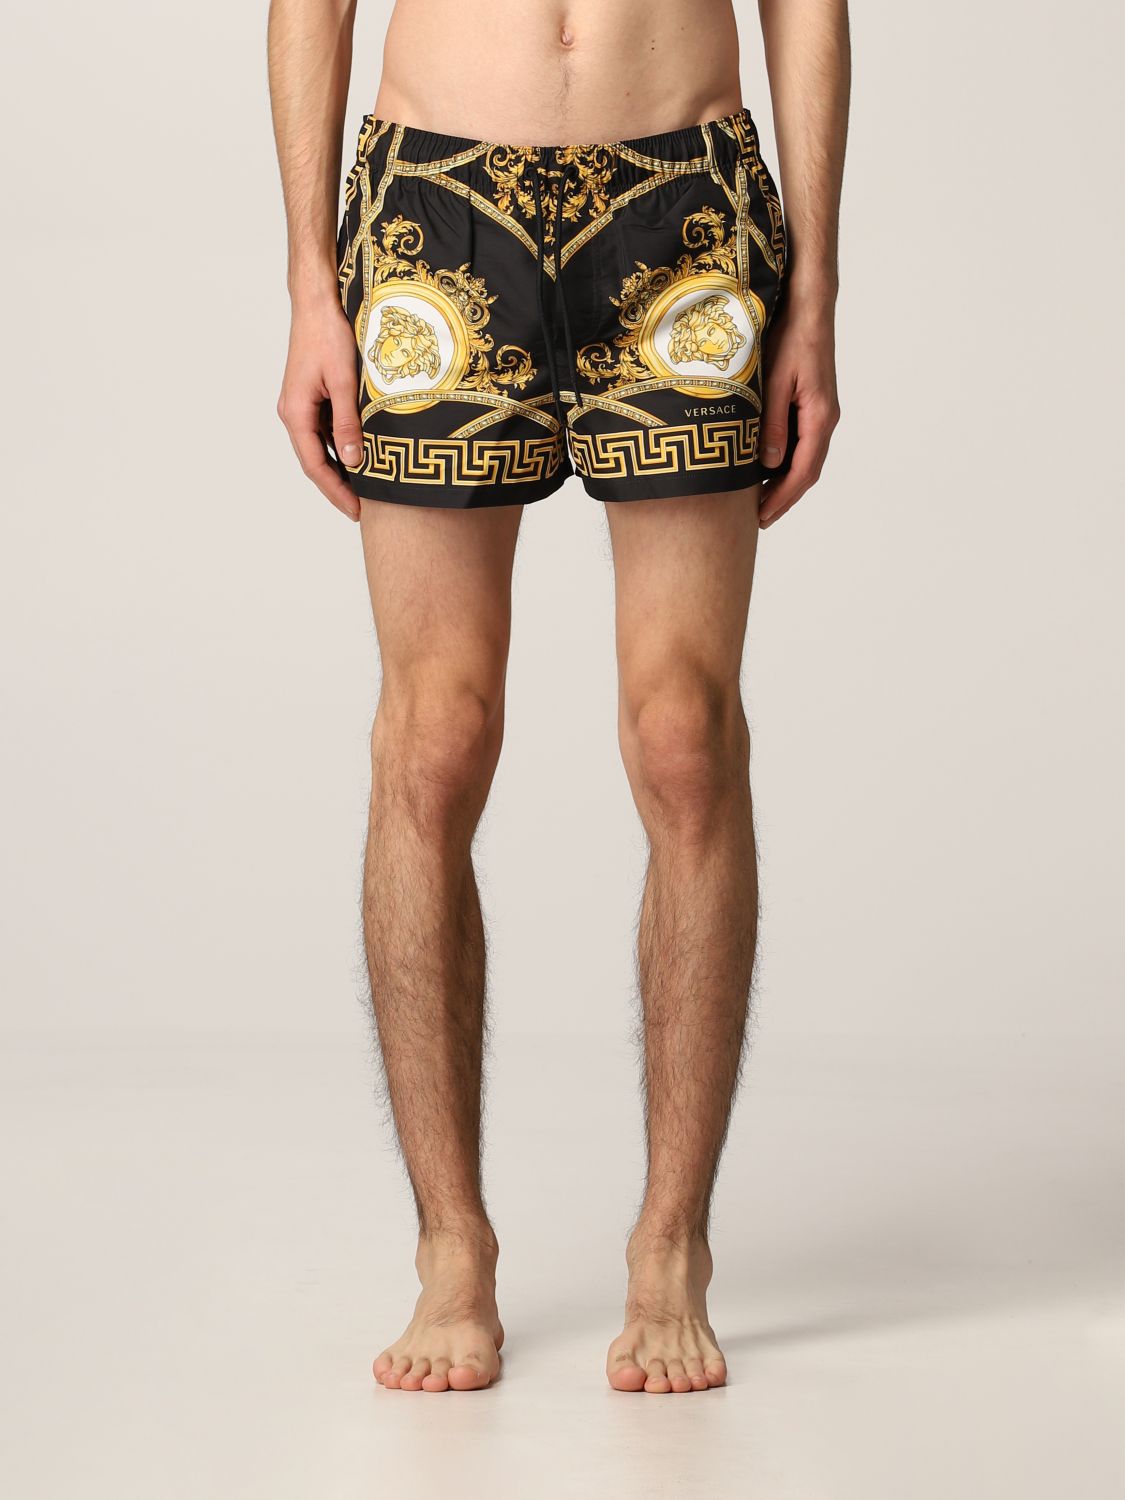 Versace technical fabric swim shorts